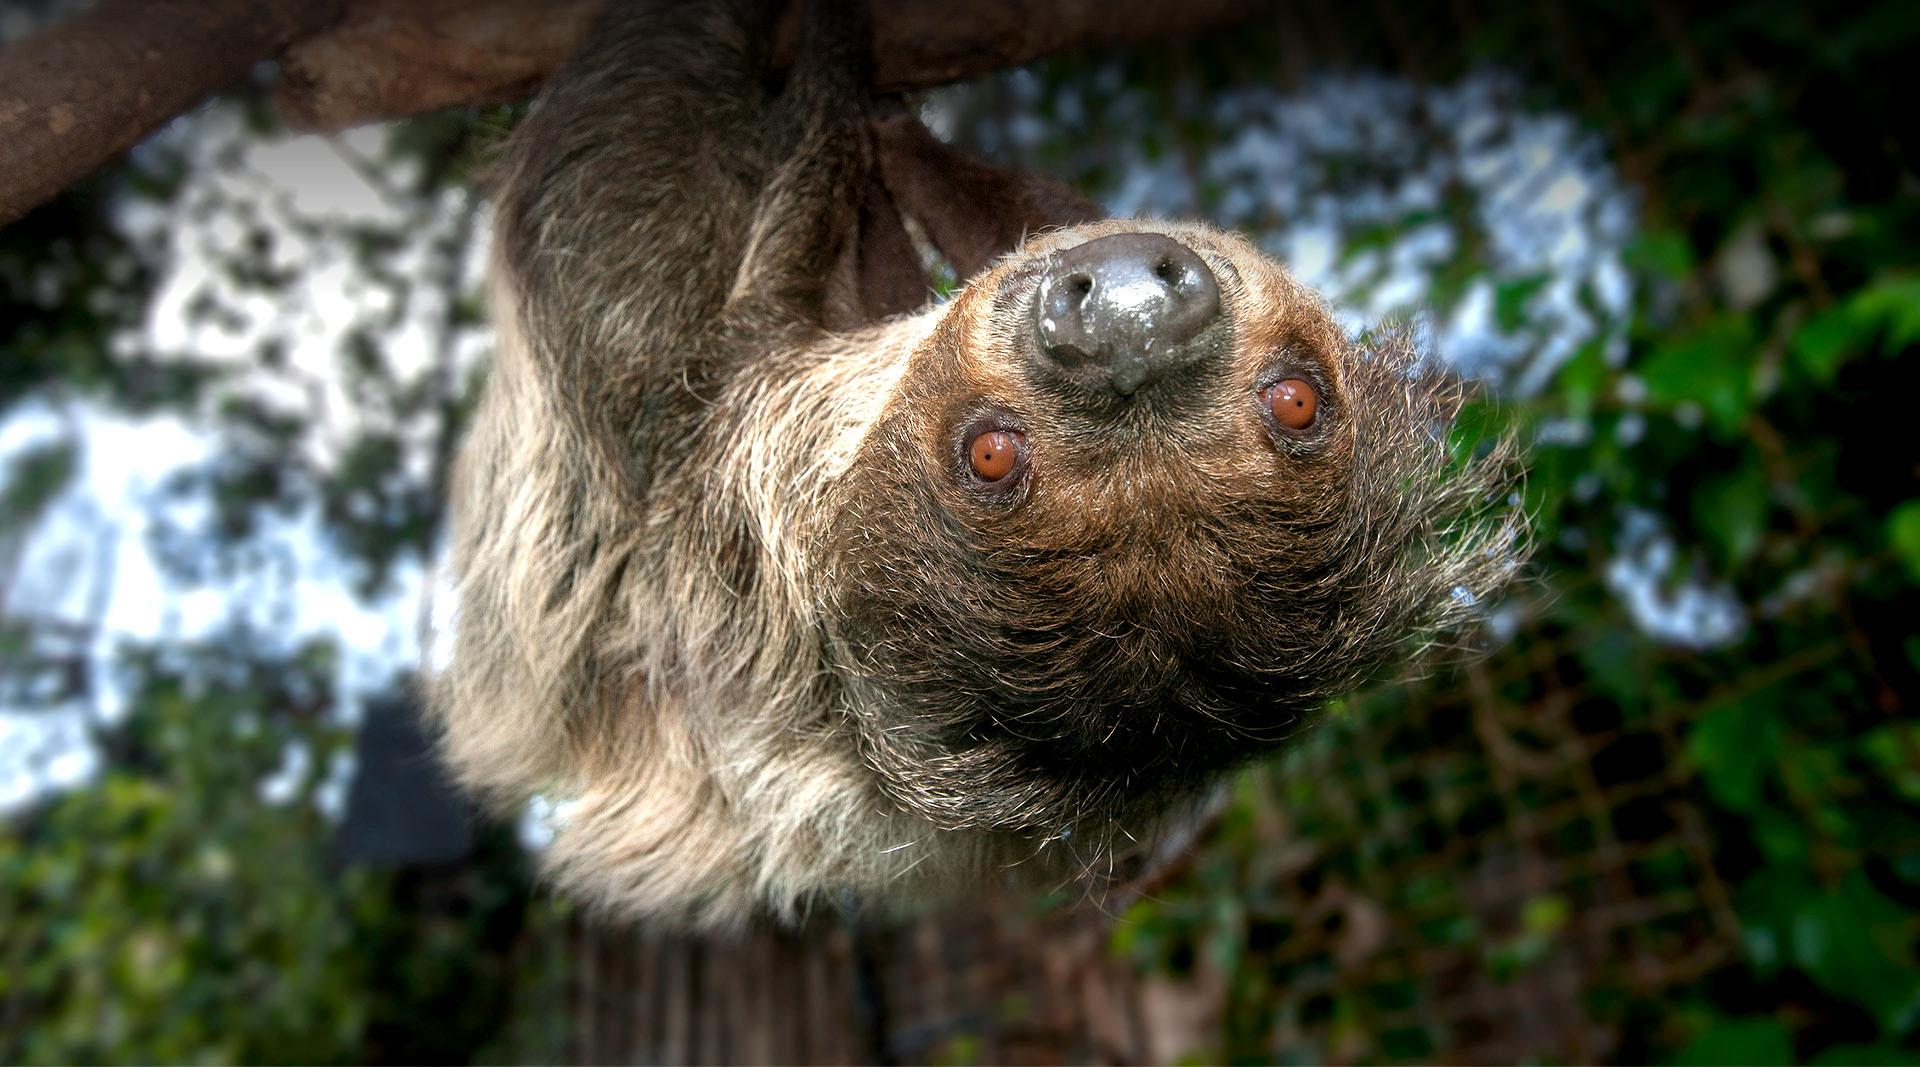 sloth hanging upside down